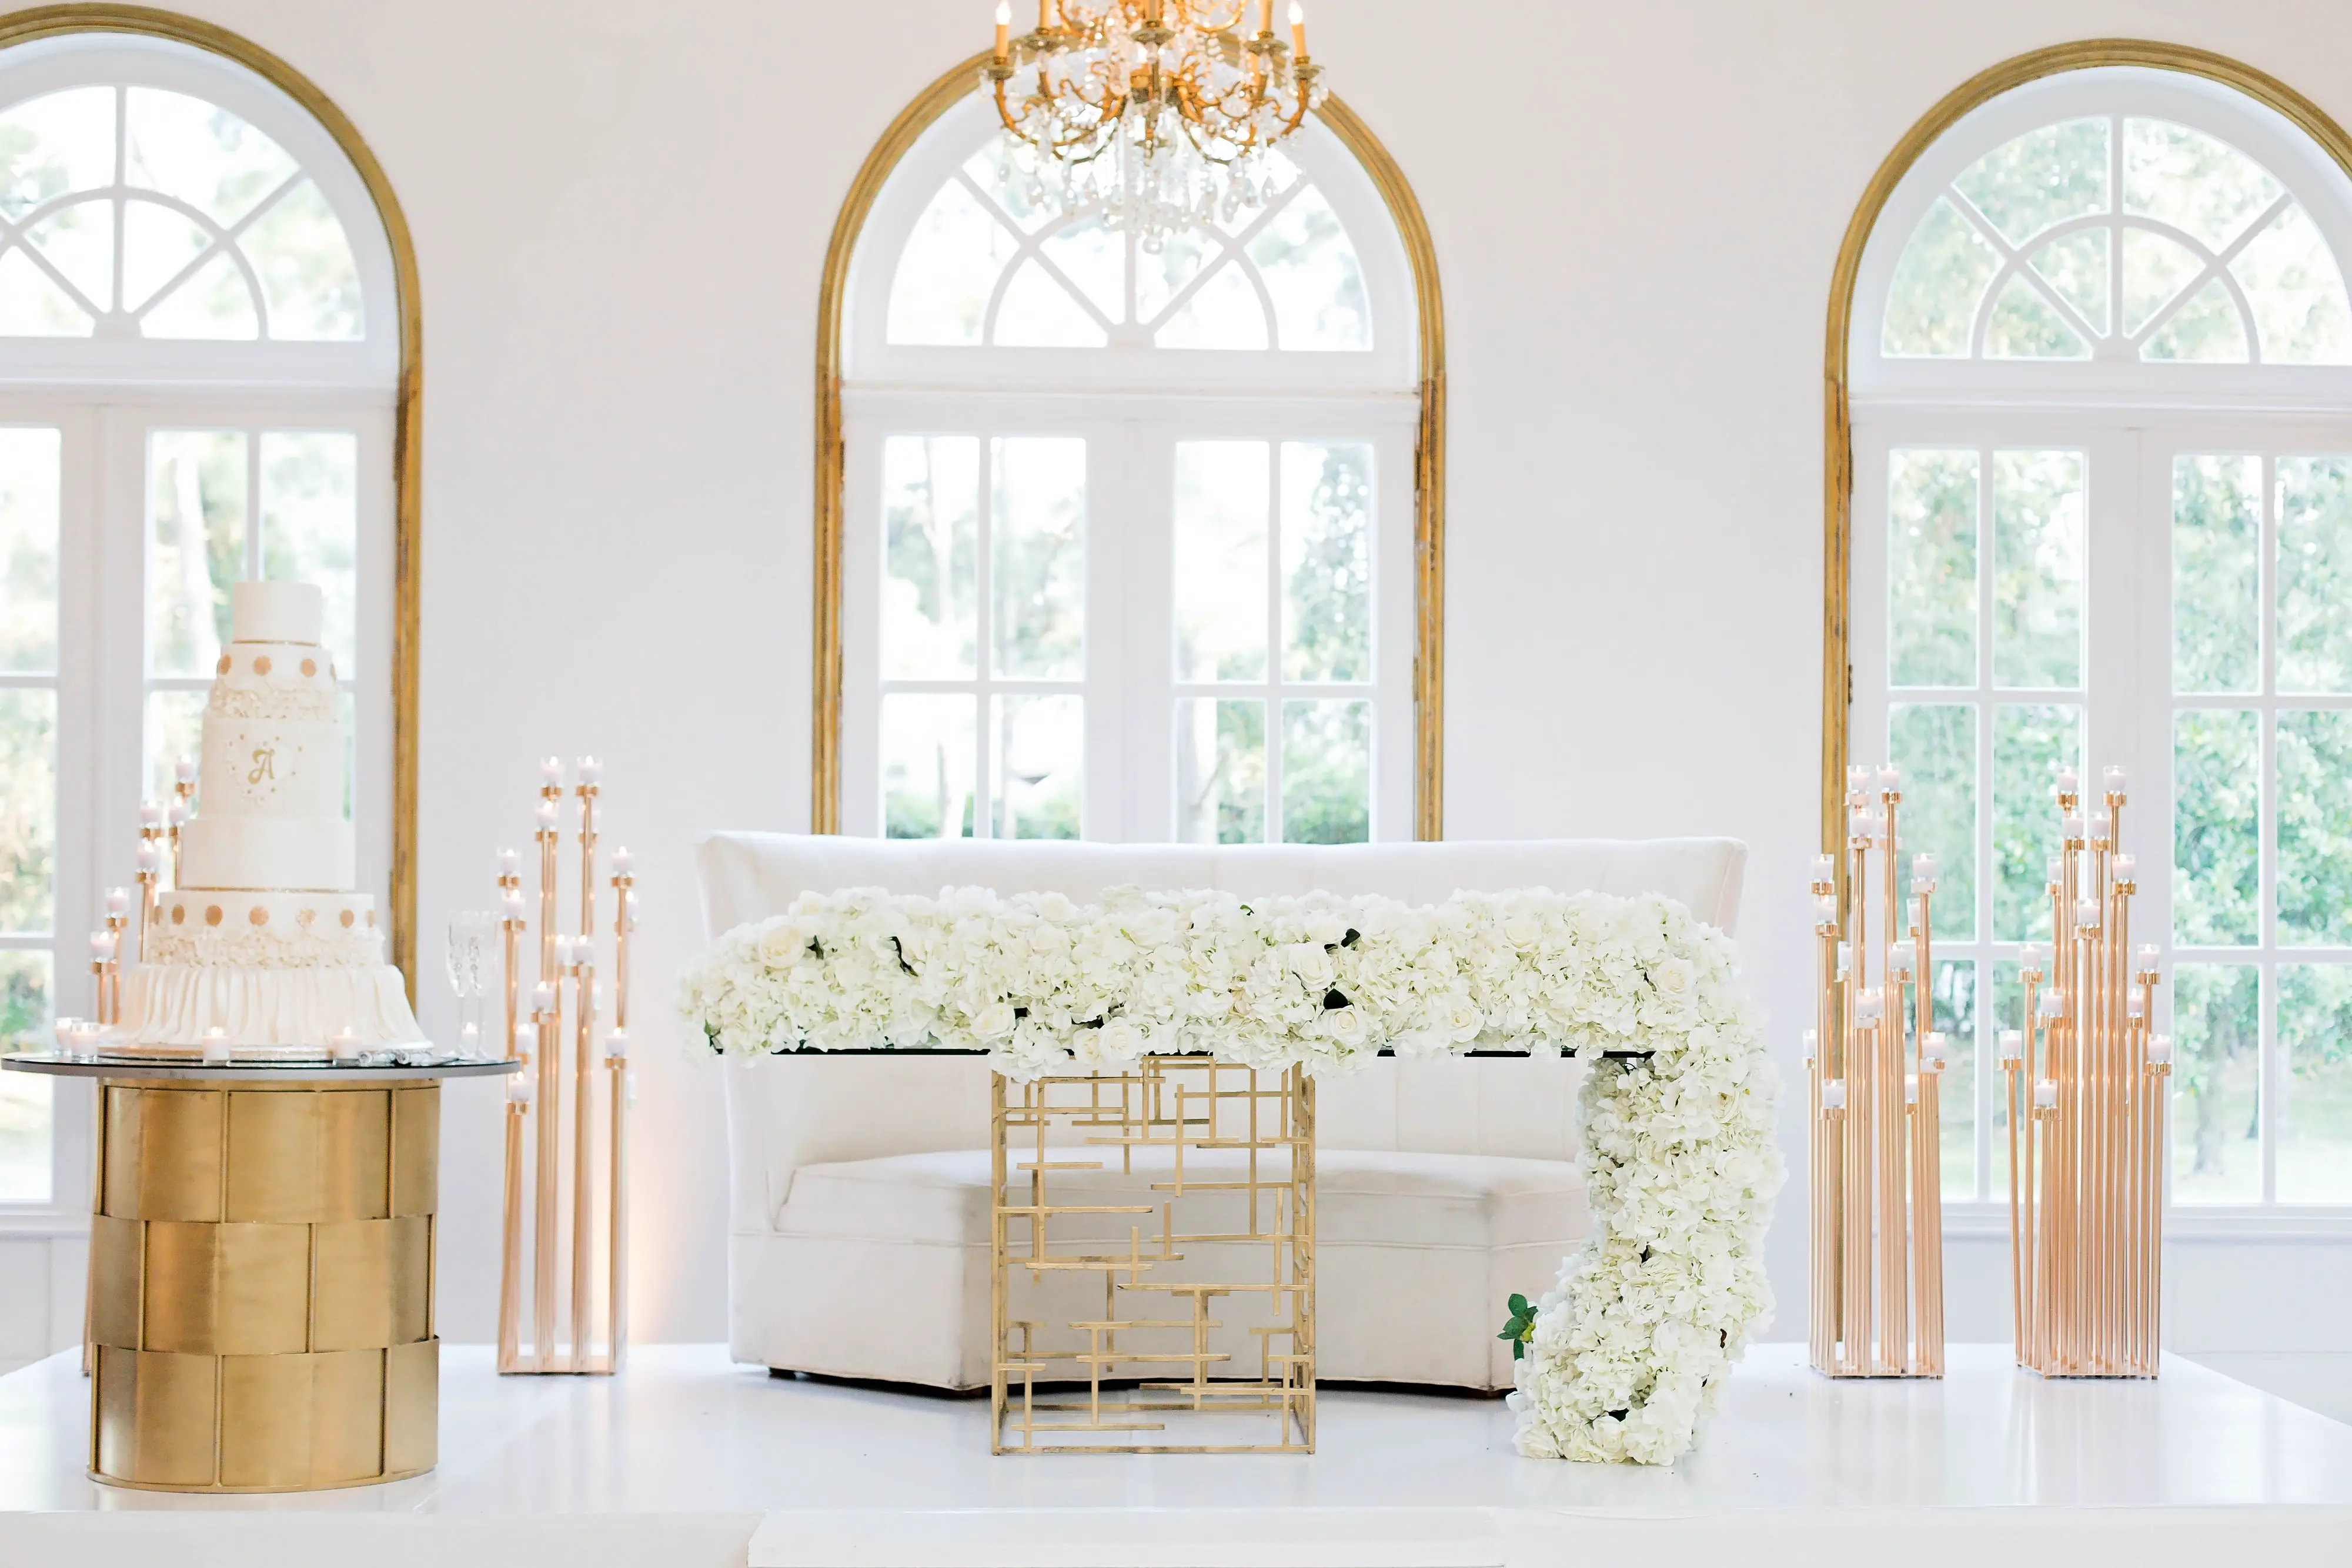 White and gold glamorous sweetheart table for ballroom wedding - Photography: Pharris Photos